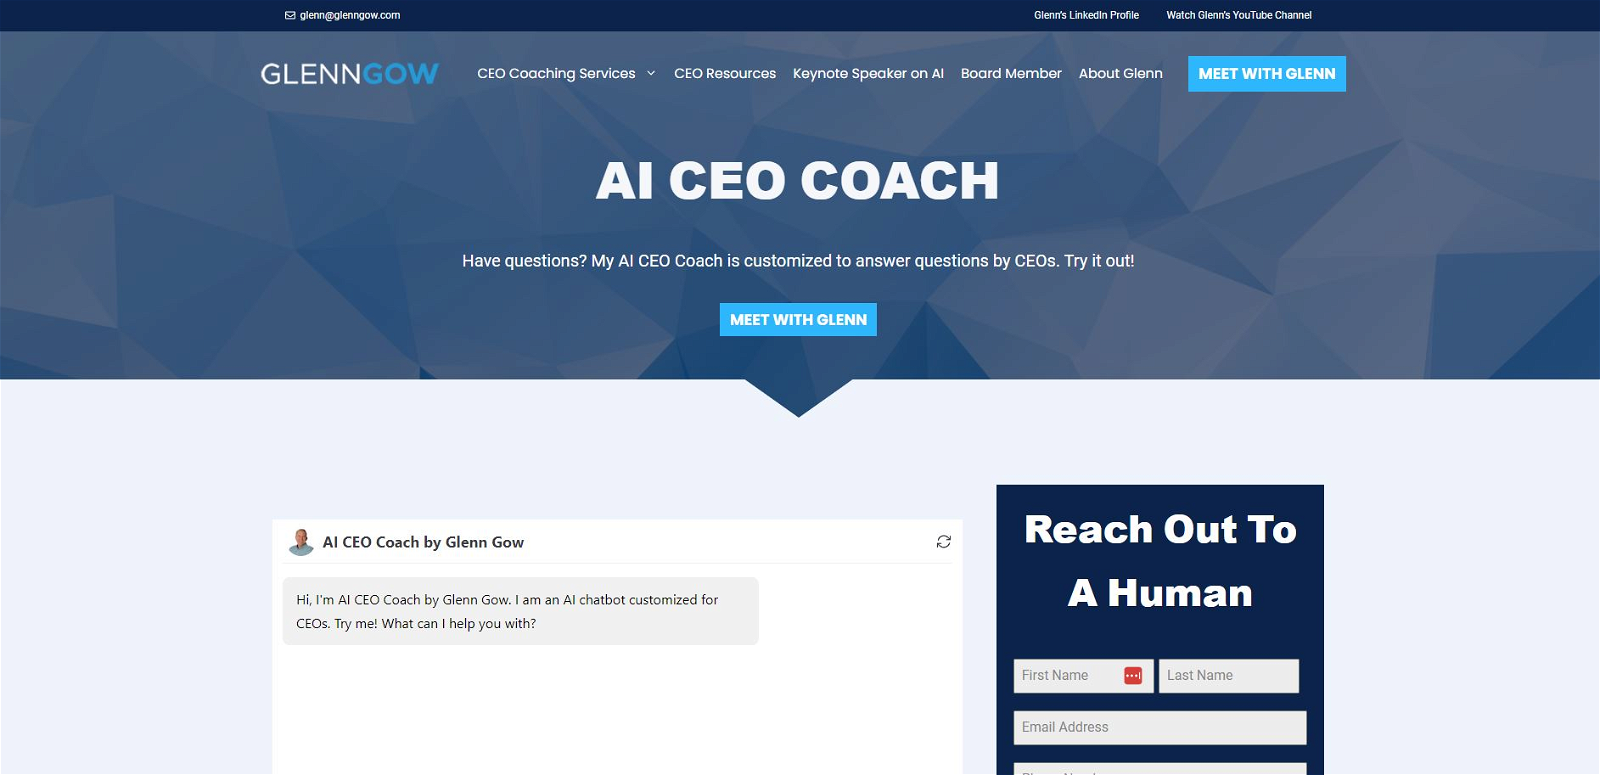 AI CEO Coach by Glenn Gow website